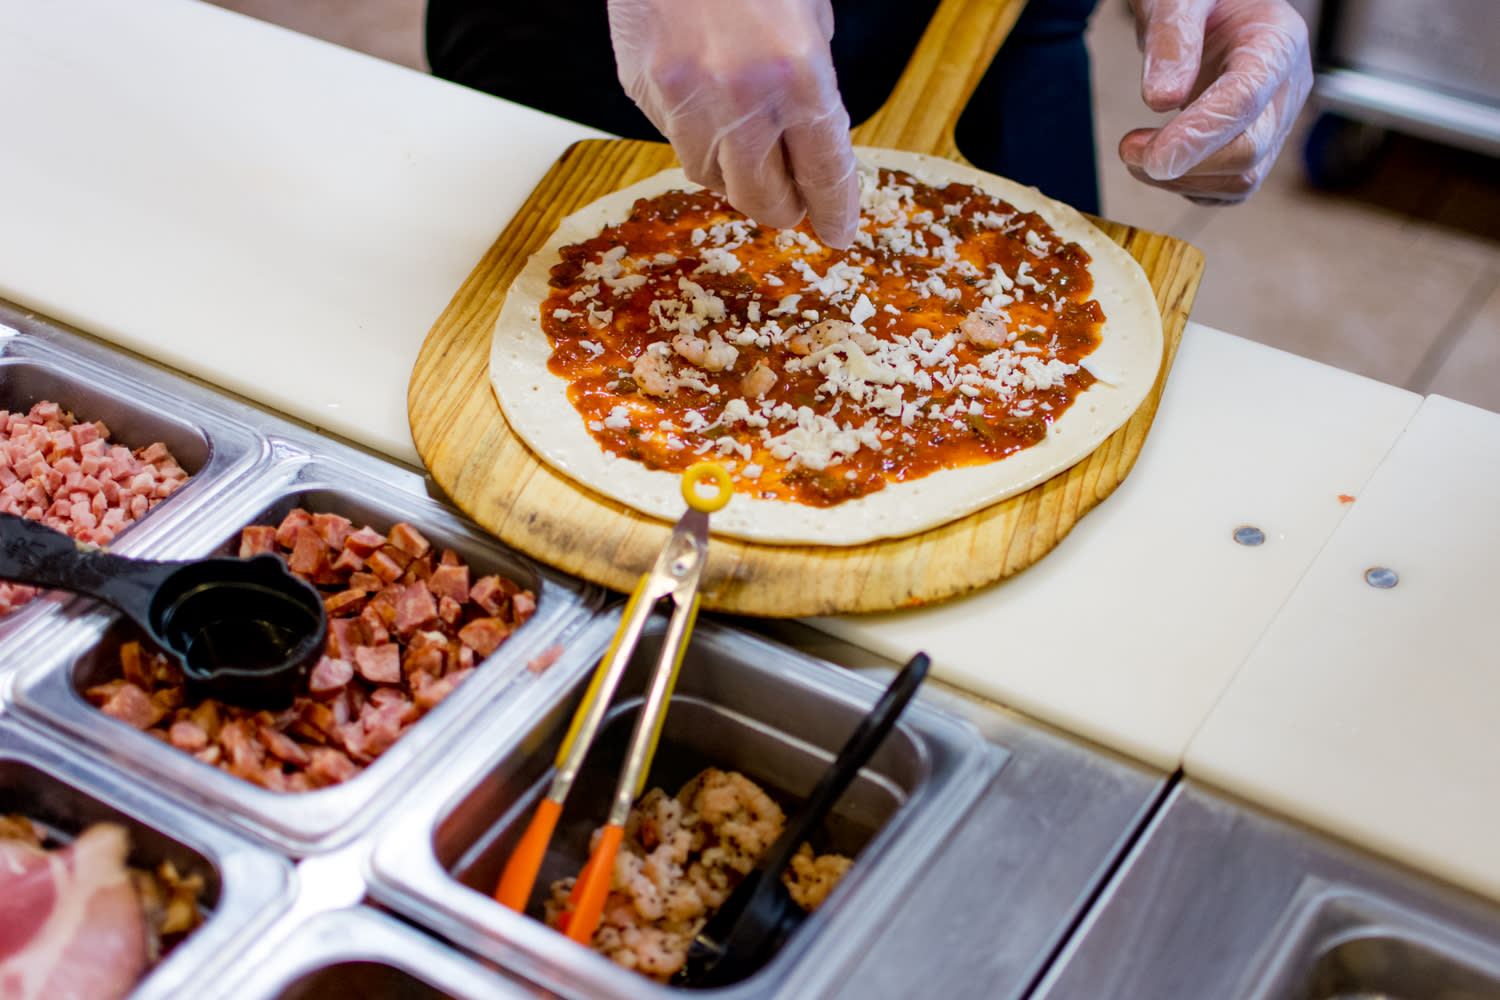 An employee making a fresh pizza at Pizza Artista in Lafayette, LA